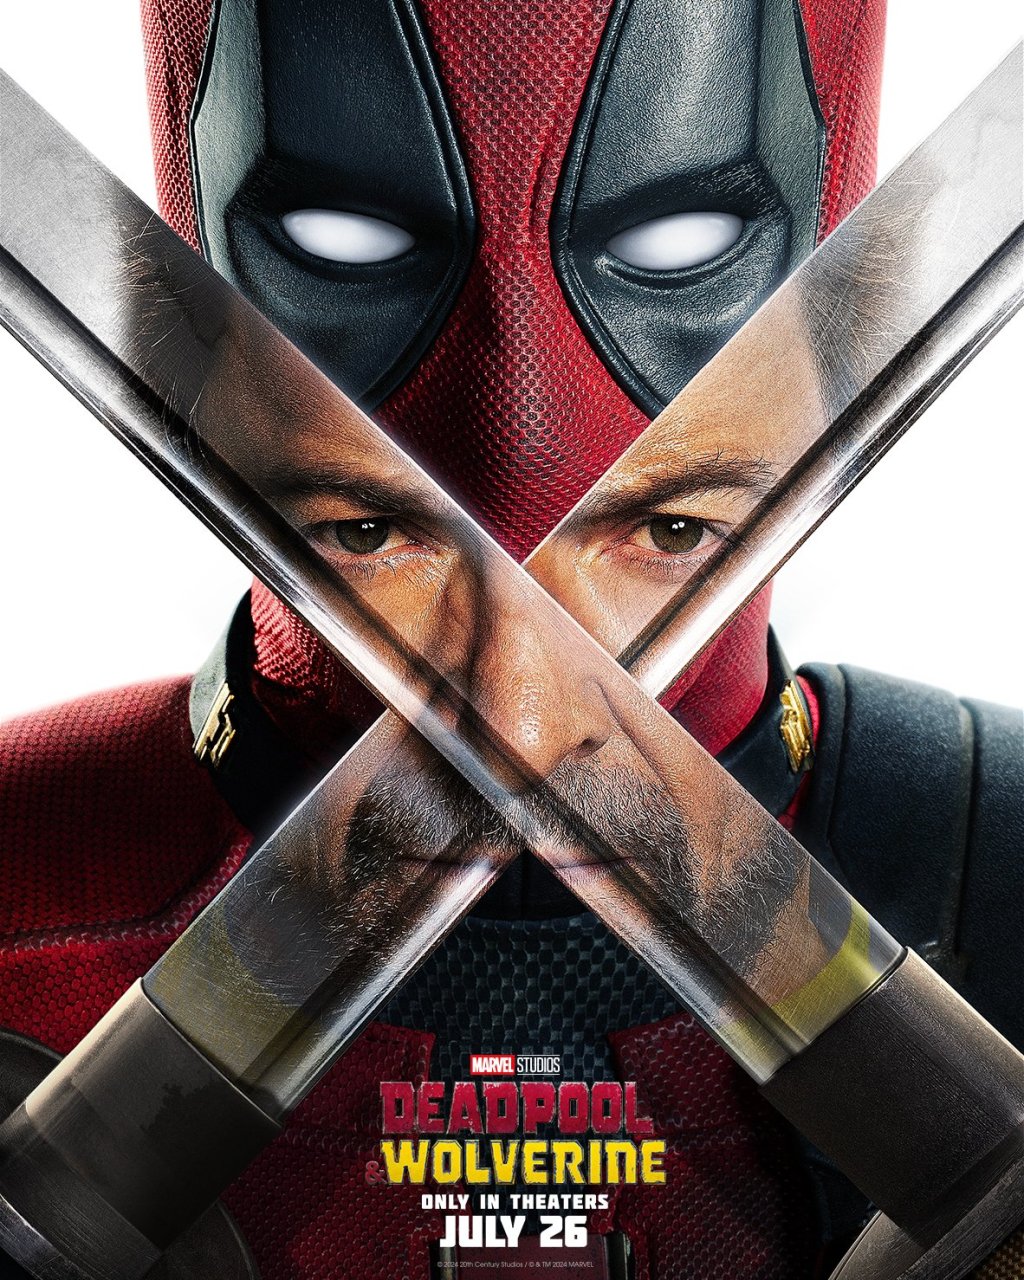 Deadpool & Wolverine Trailer Released